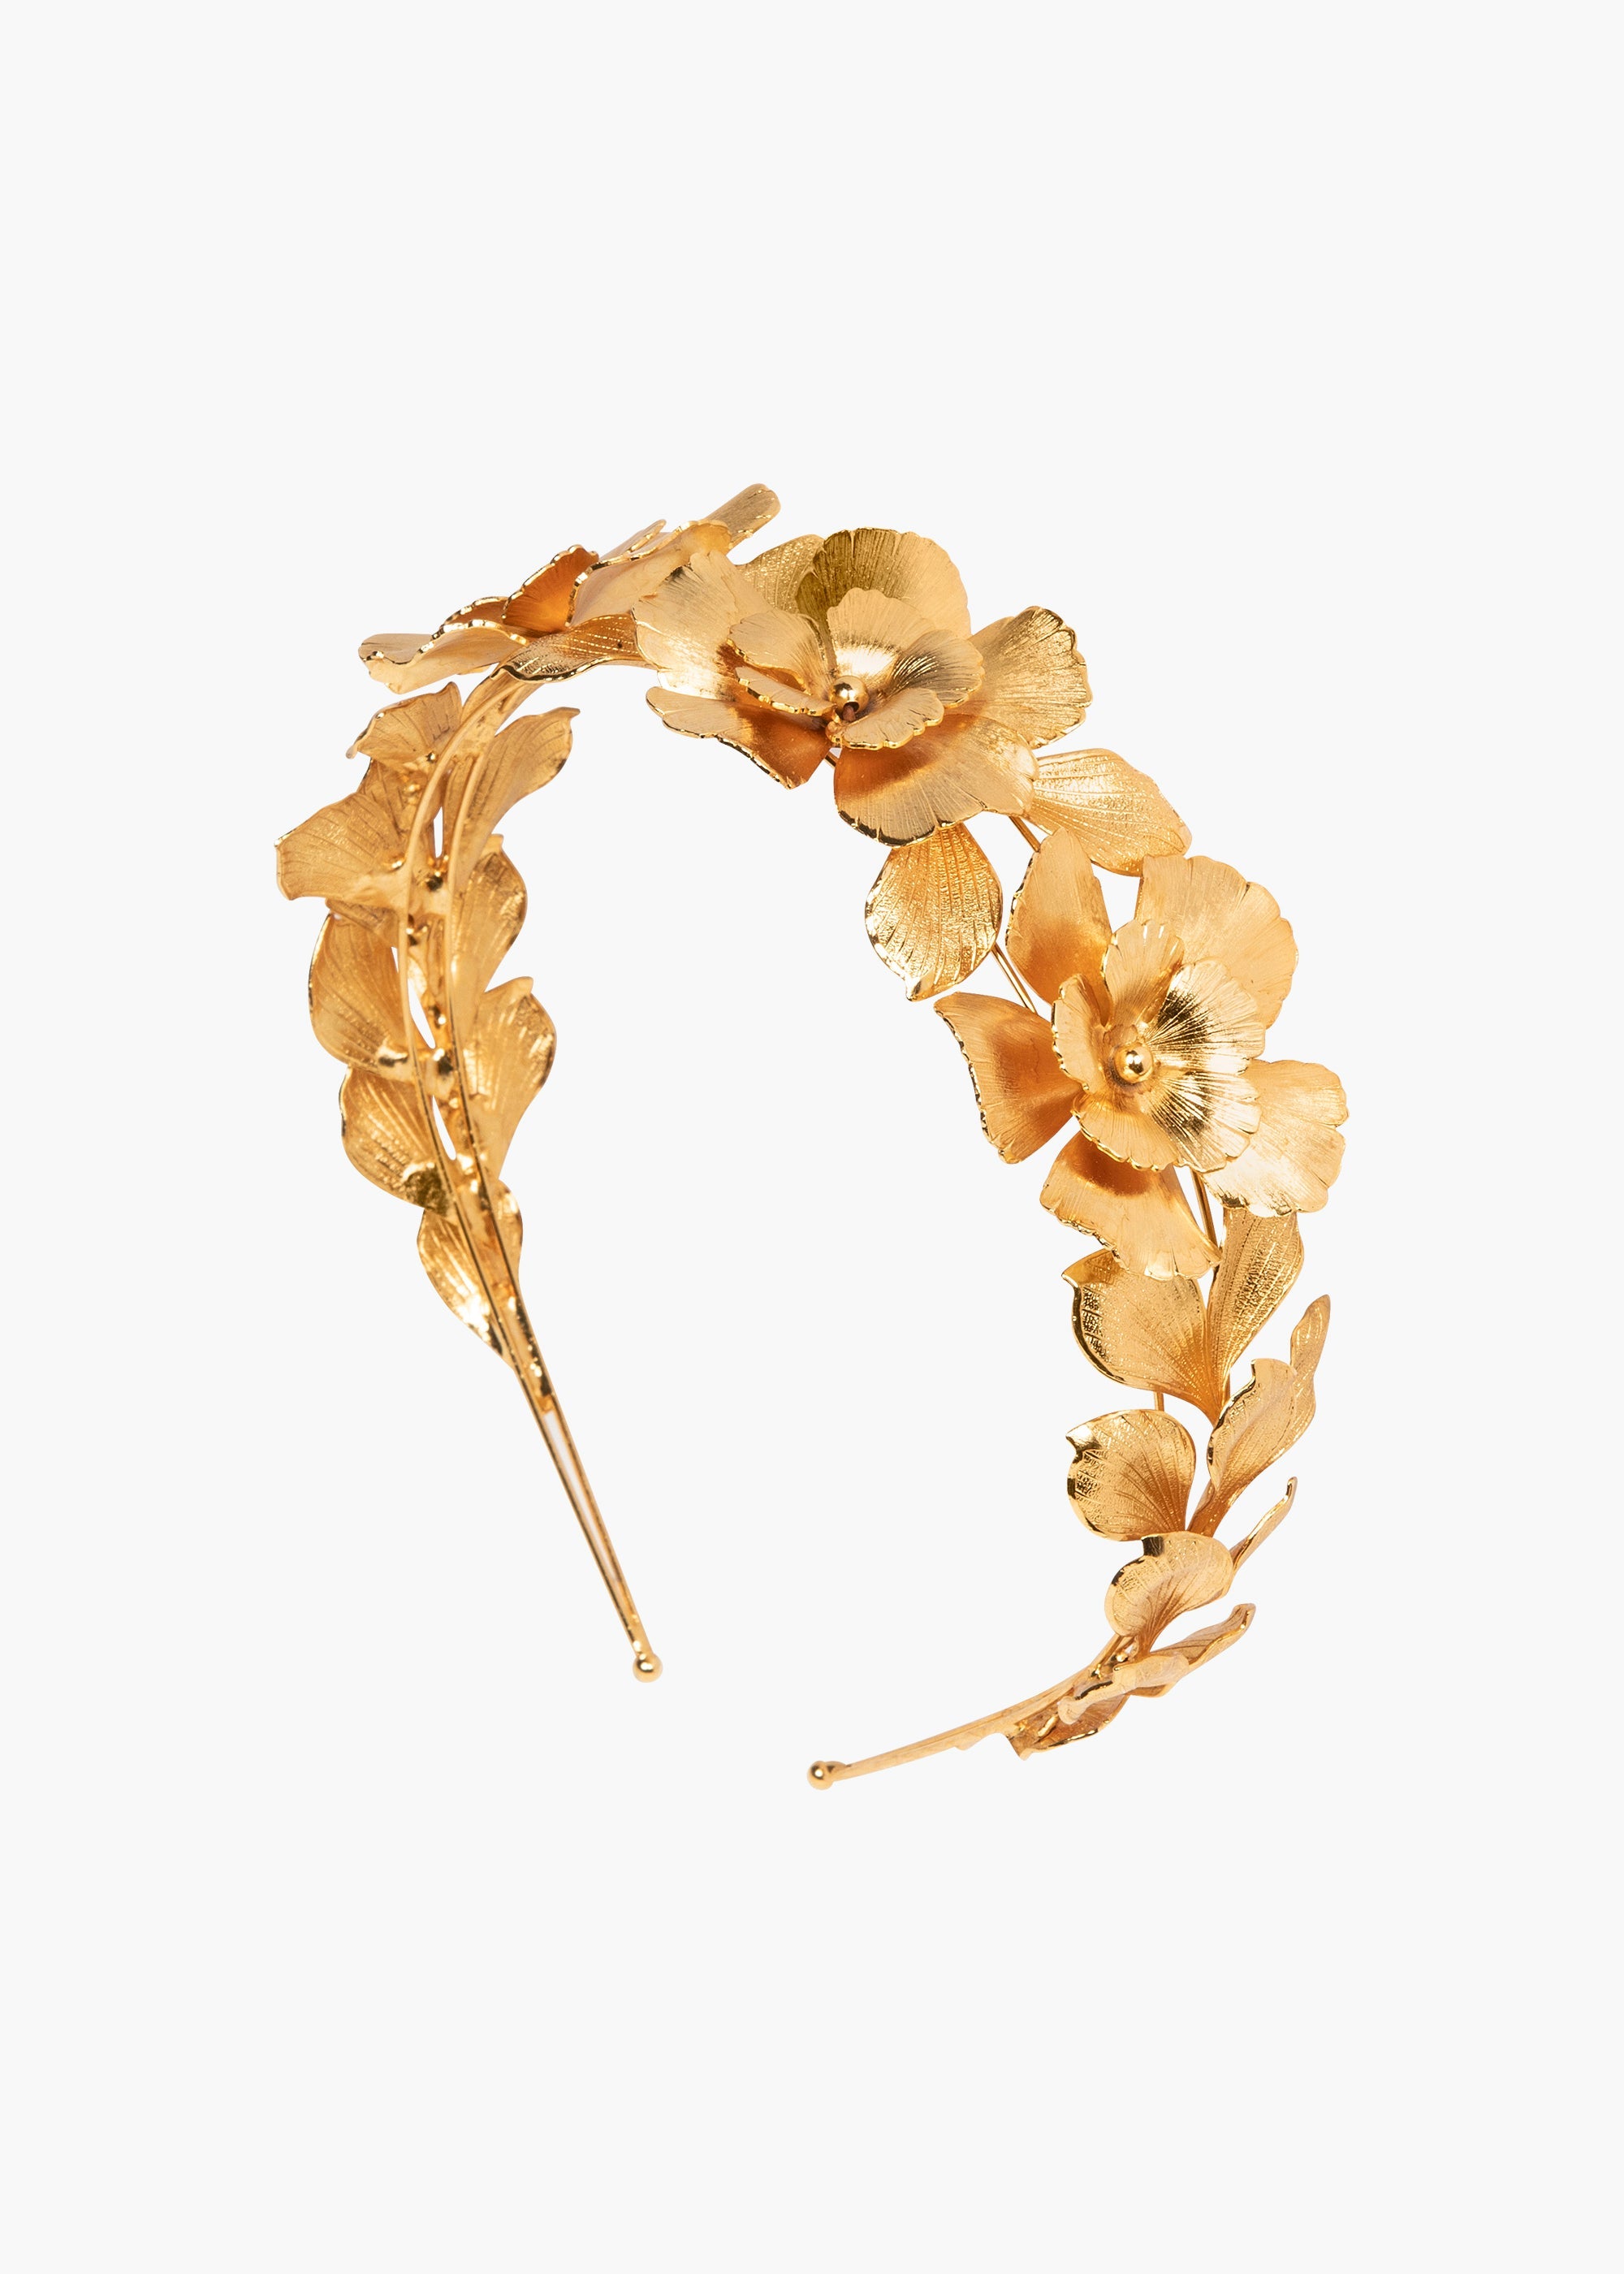 Flower bracelet - Rowena Bracelet